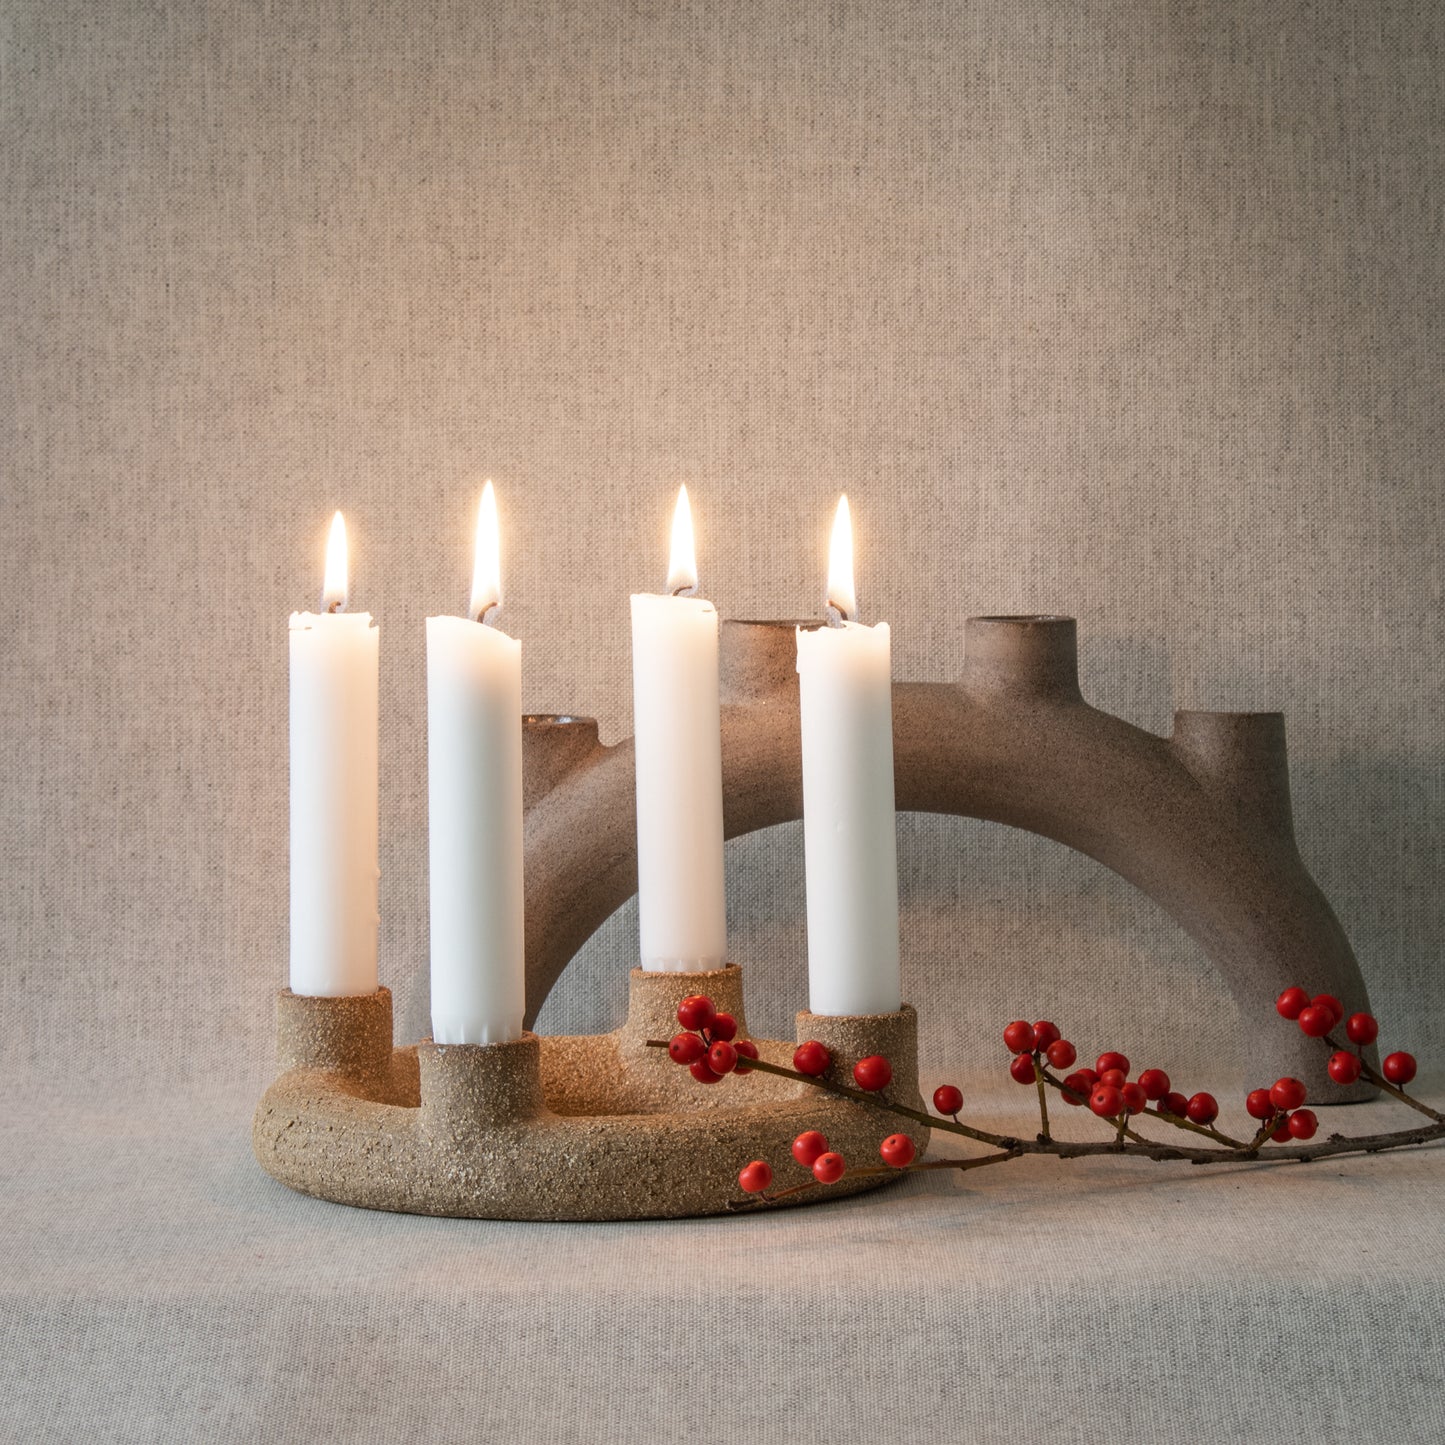 Candlestick Arc, 4 candles - Advent candlestick